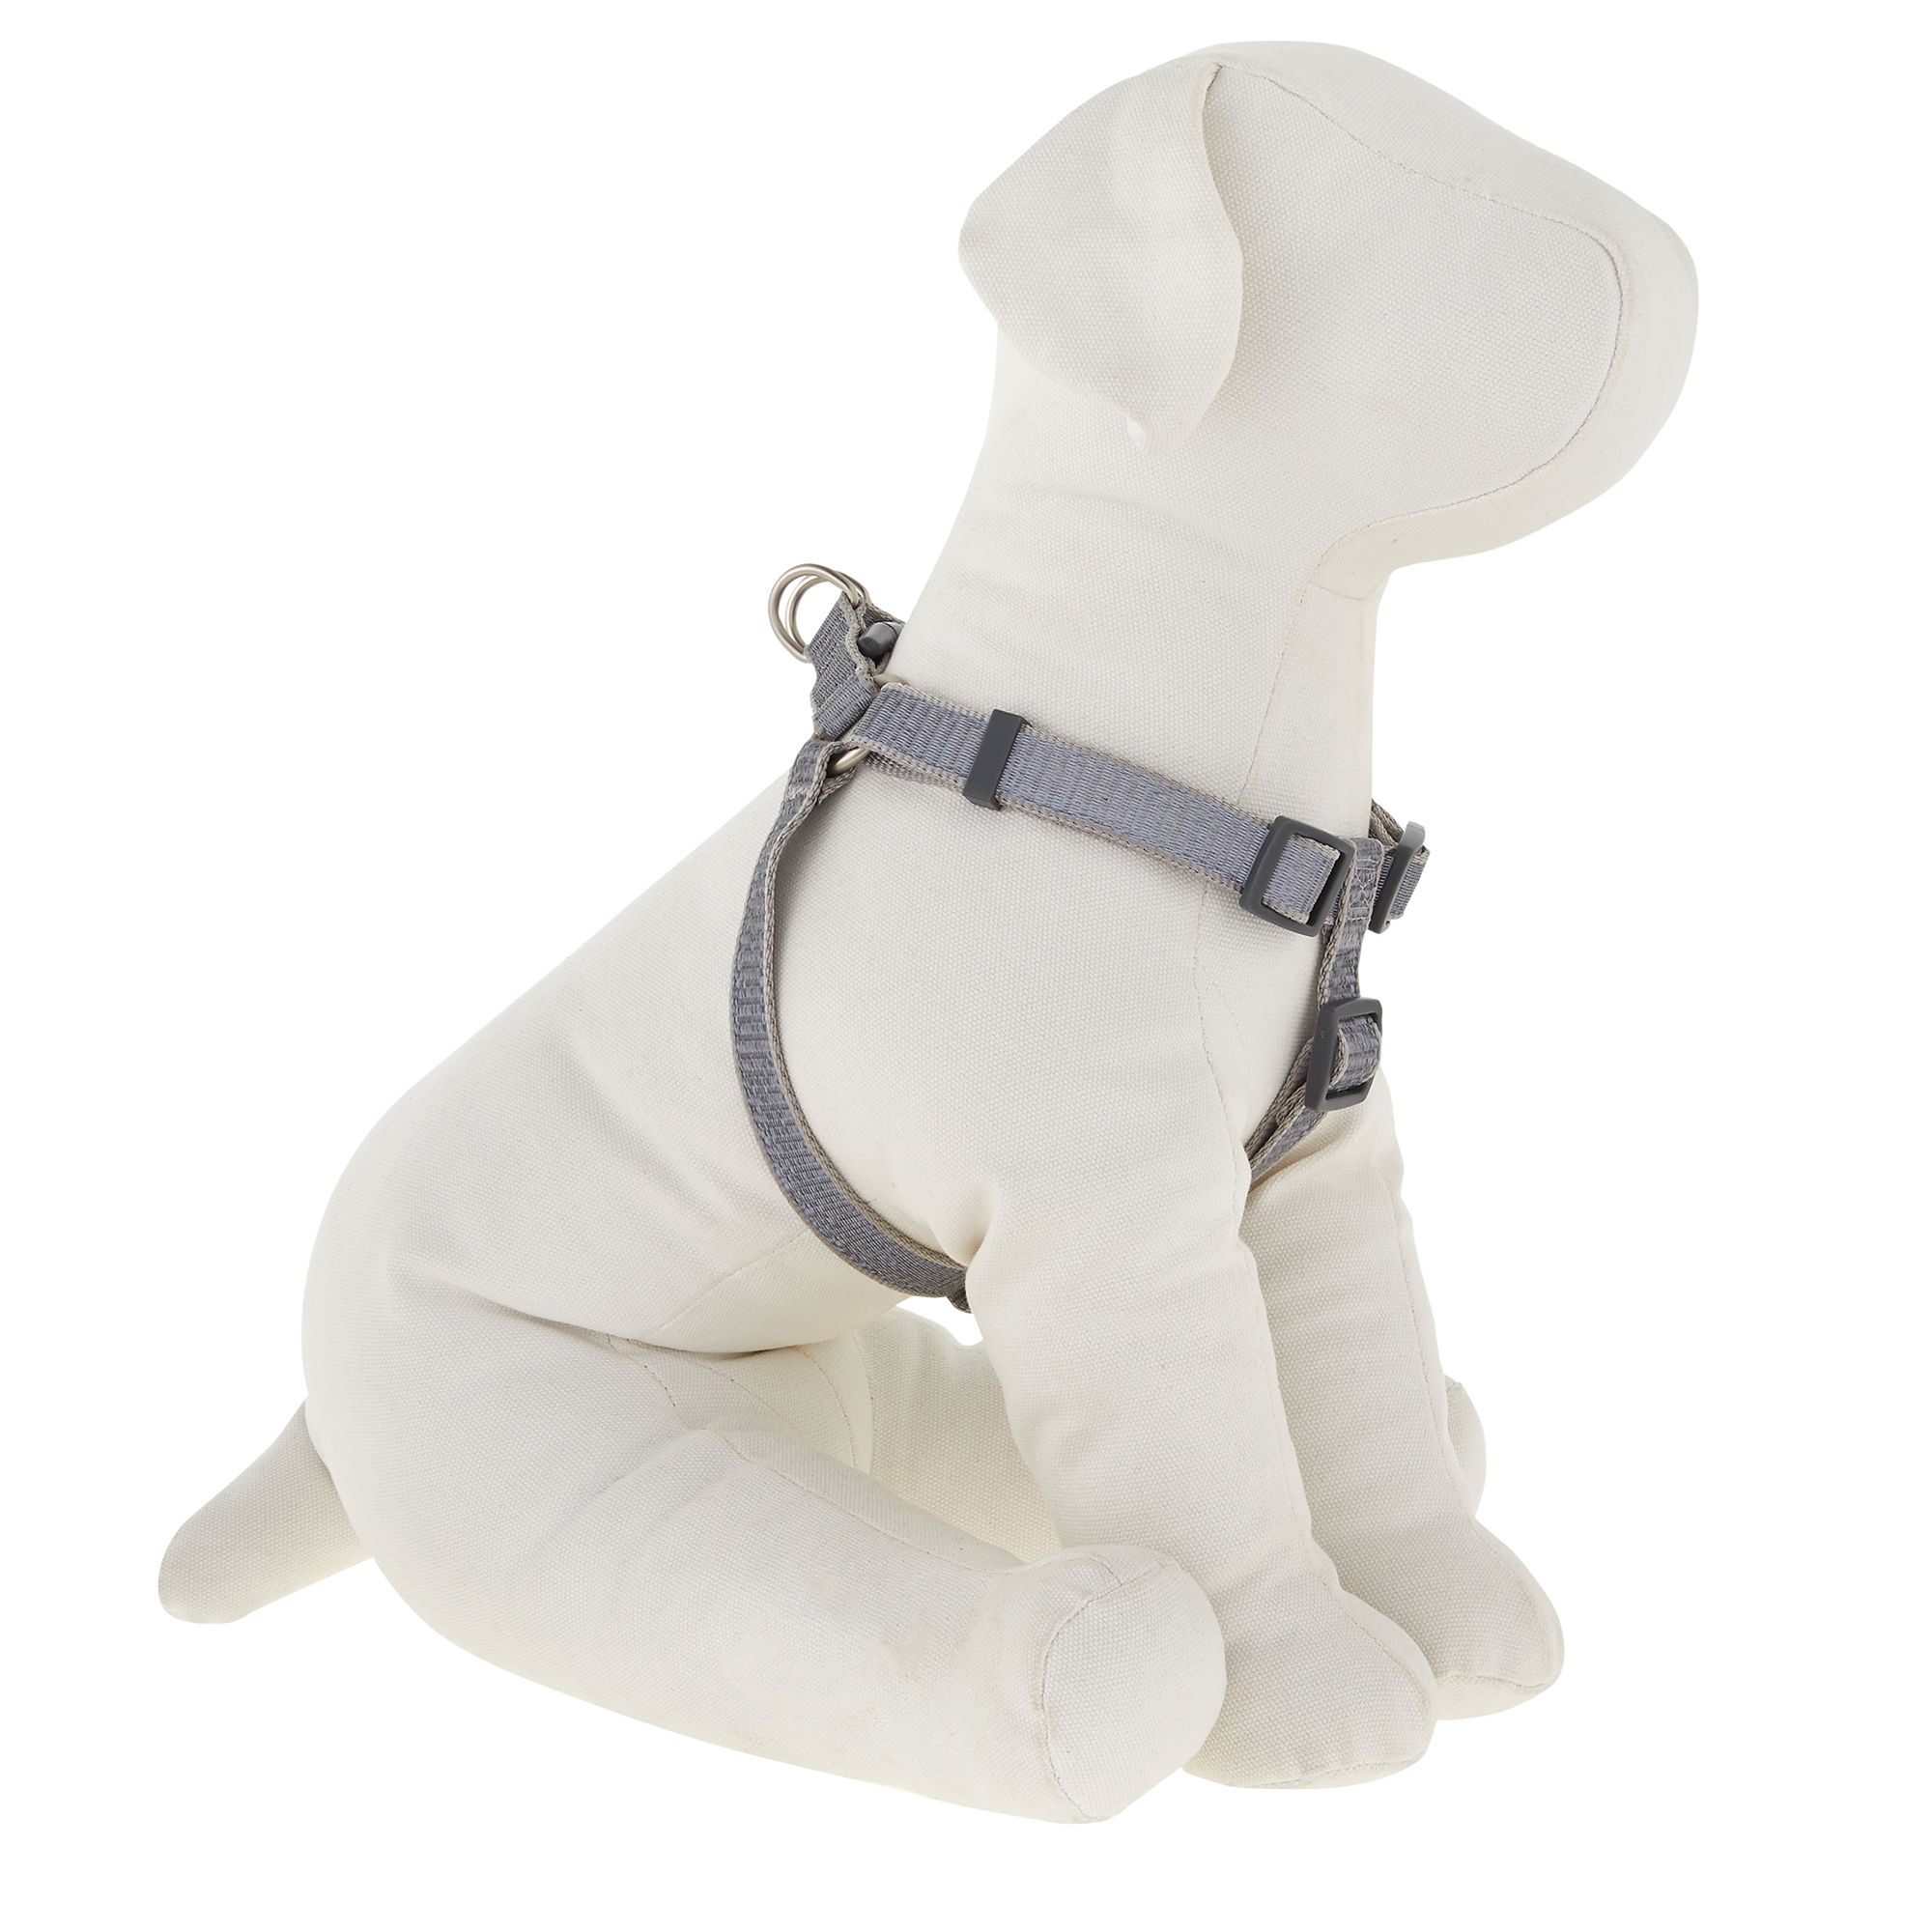 reflective dog harness and leash